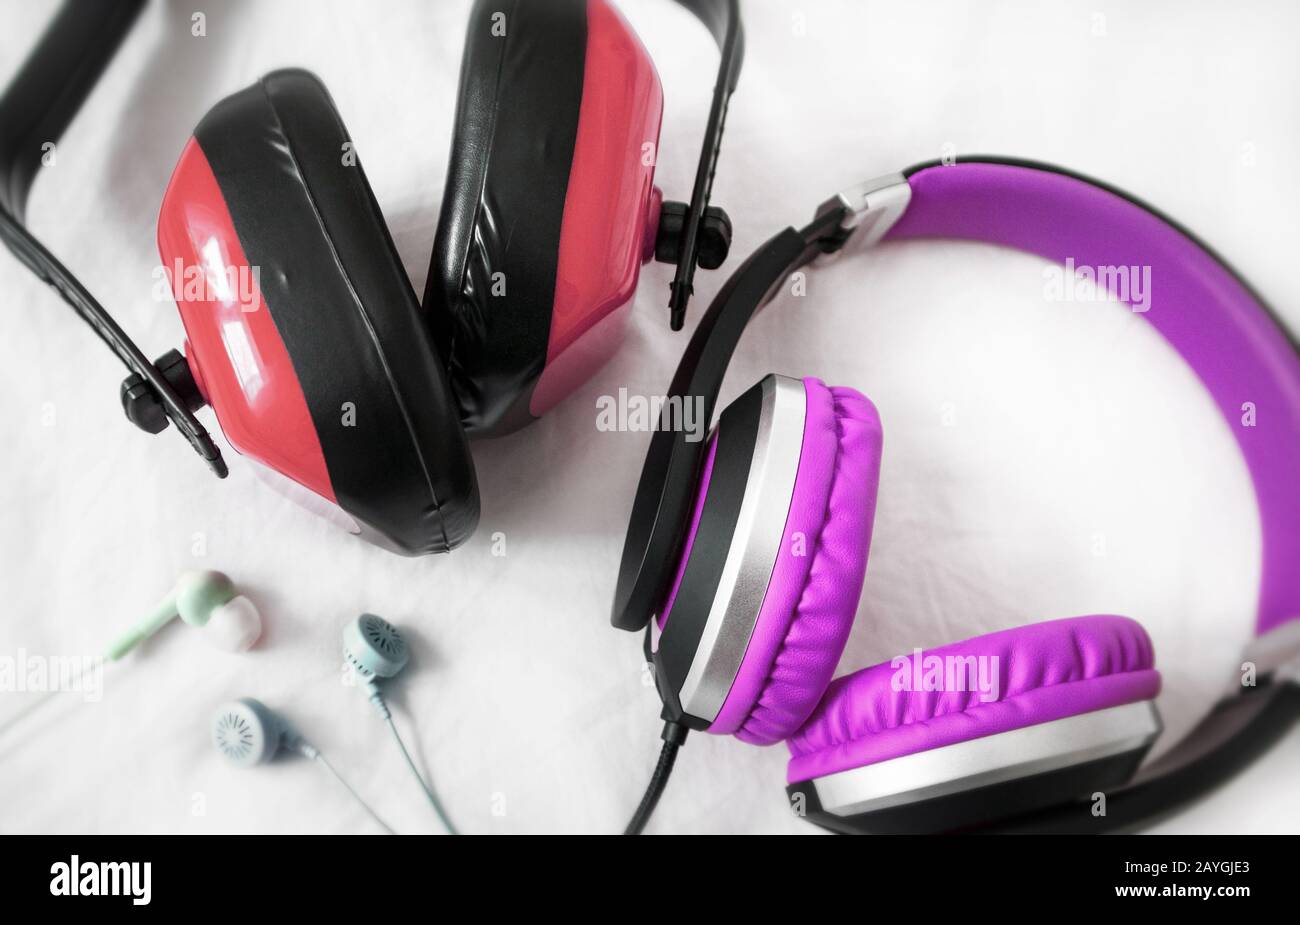 Noise canceler, headphones and earphones on a clear surface. Stock Photo